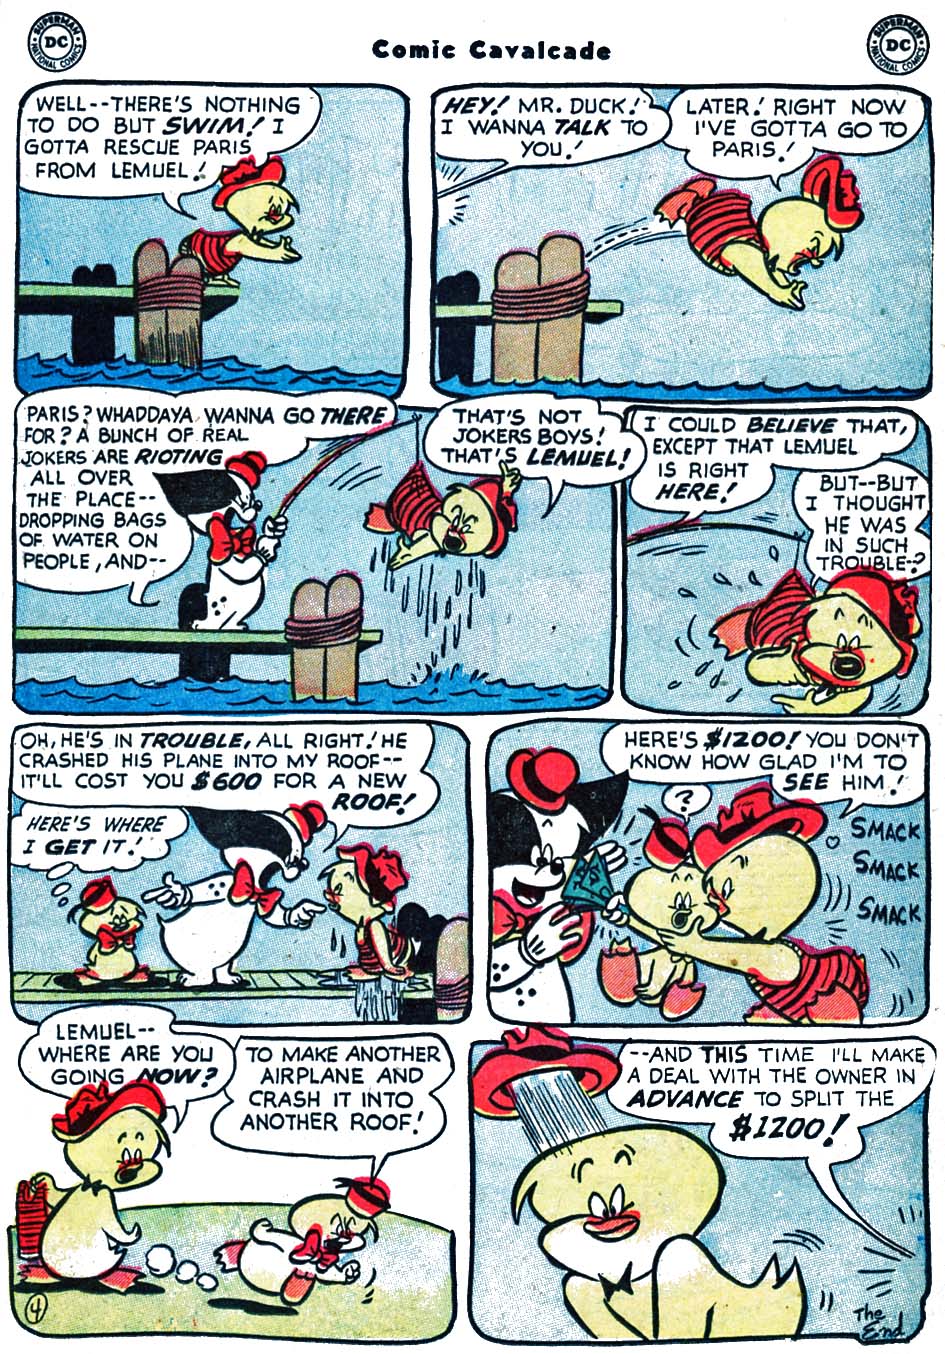 Comic Cavalcade issue 62 - Page 19